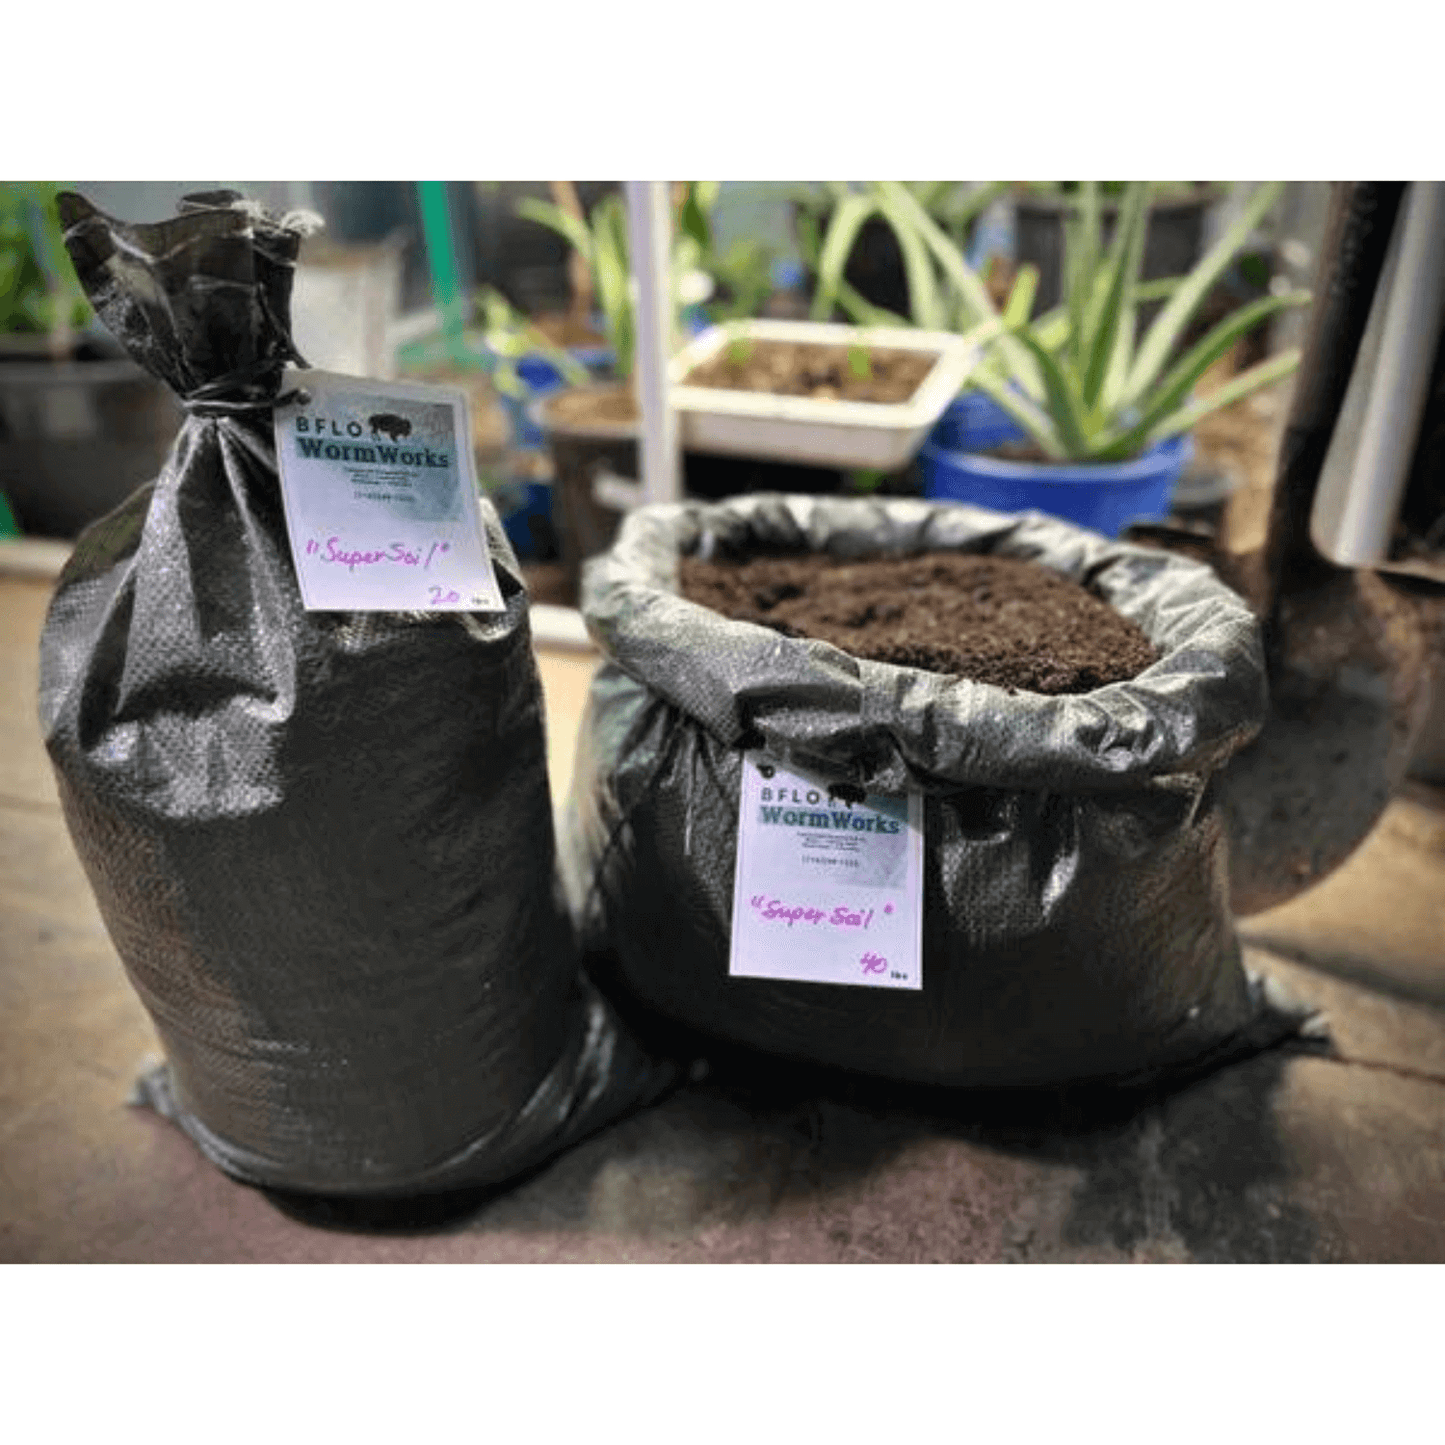 BFLO Worm Works Worm Castings, 40 lb Bag BFLOWW40 Planting & Watering